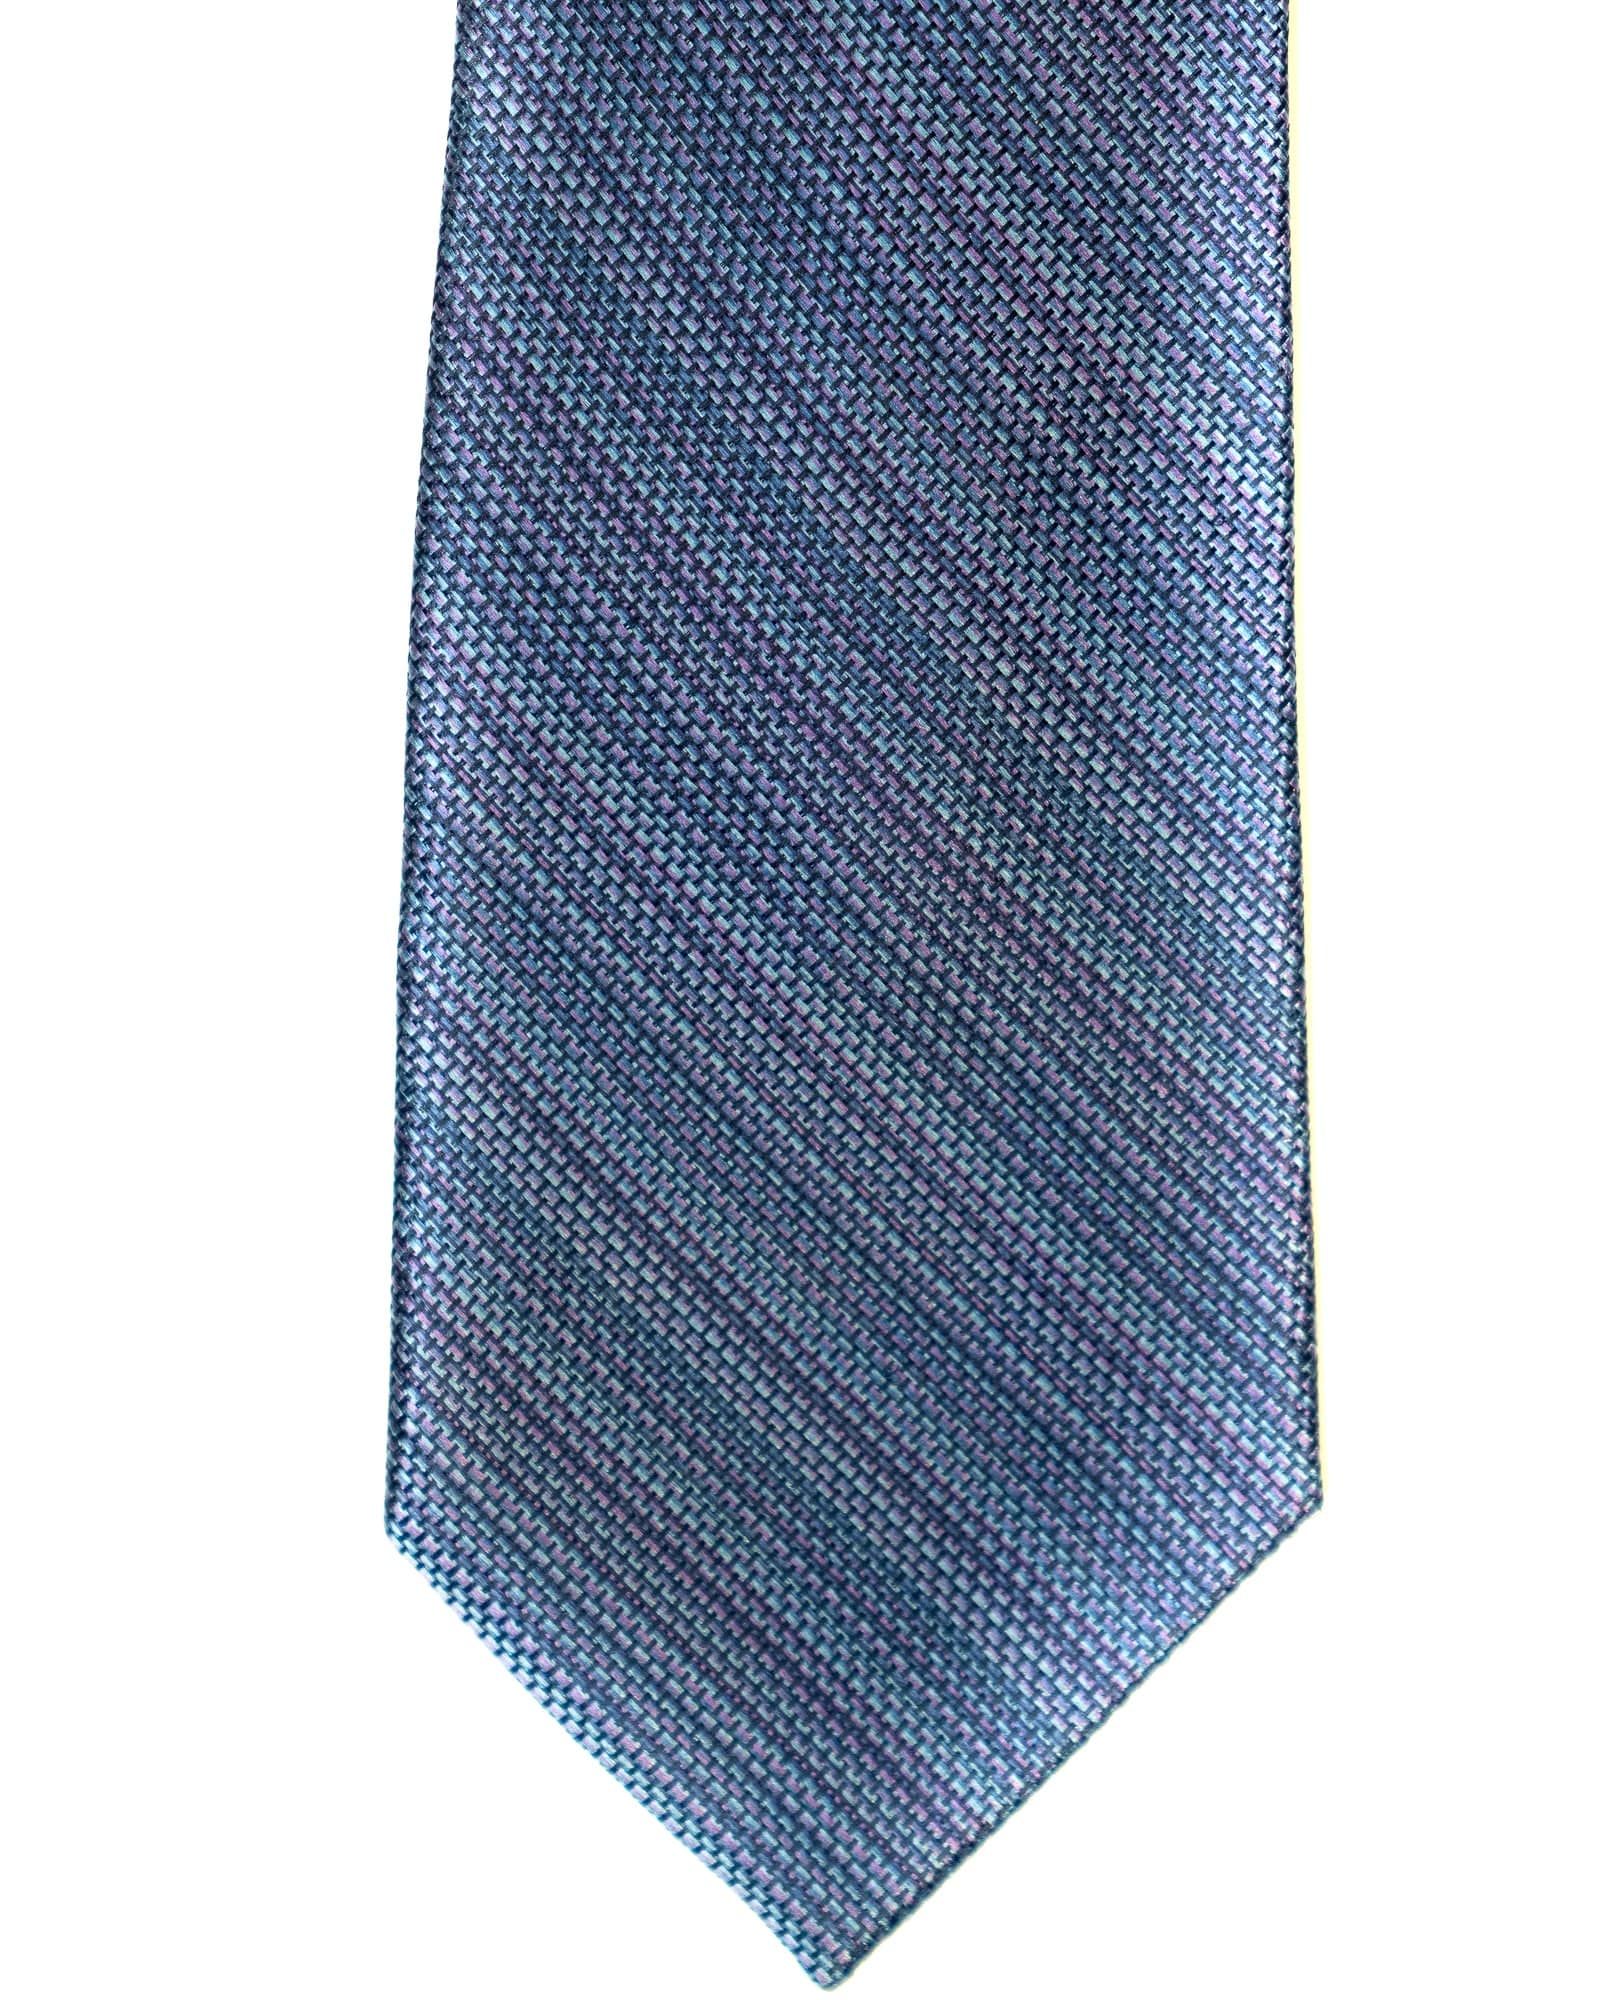 Silk Tie In Blue Heather Stripe - Rainwater's Men's Clothing and Tuxedo Rental